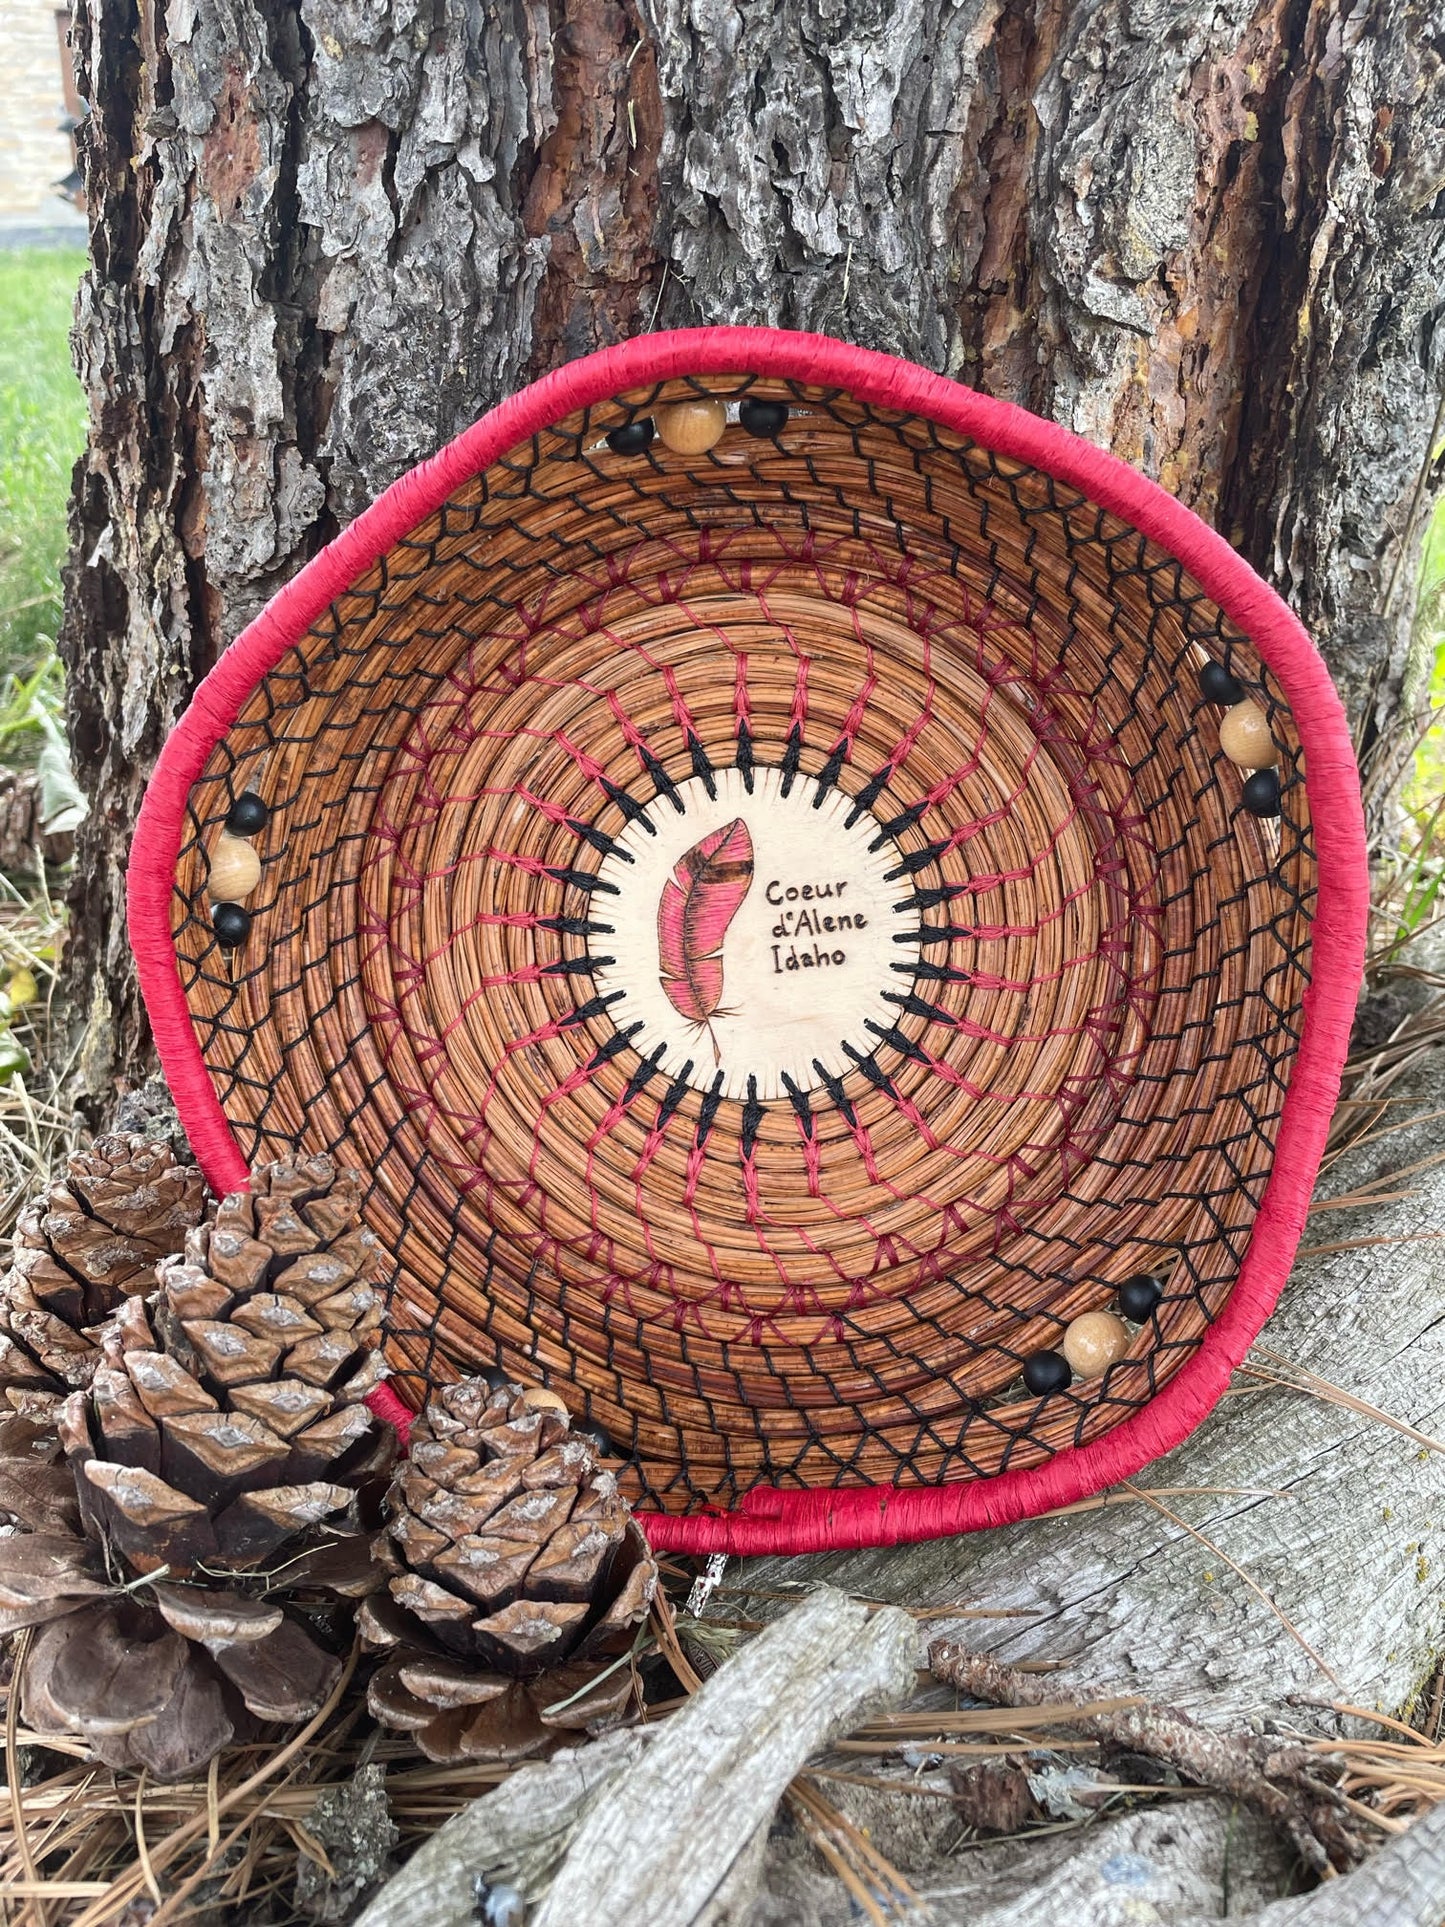 Pine Needle Basket Making | Barbara Snarr | February 24th